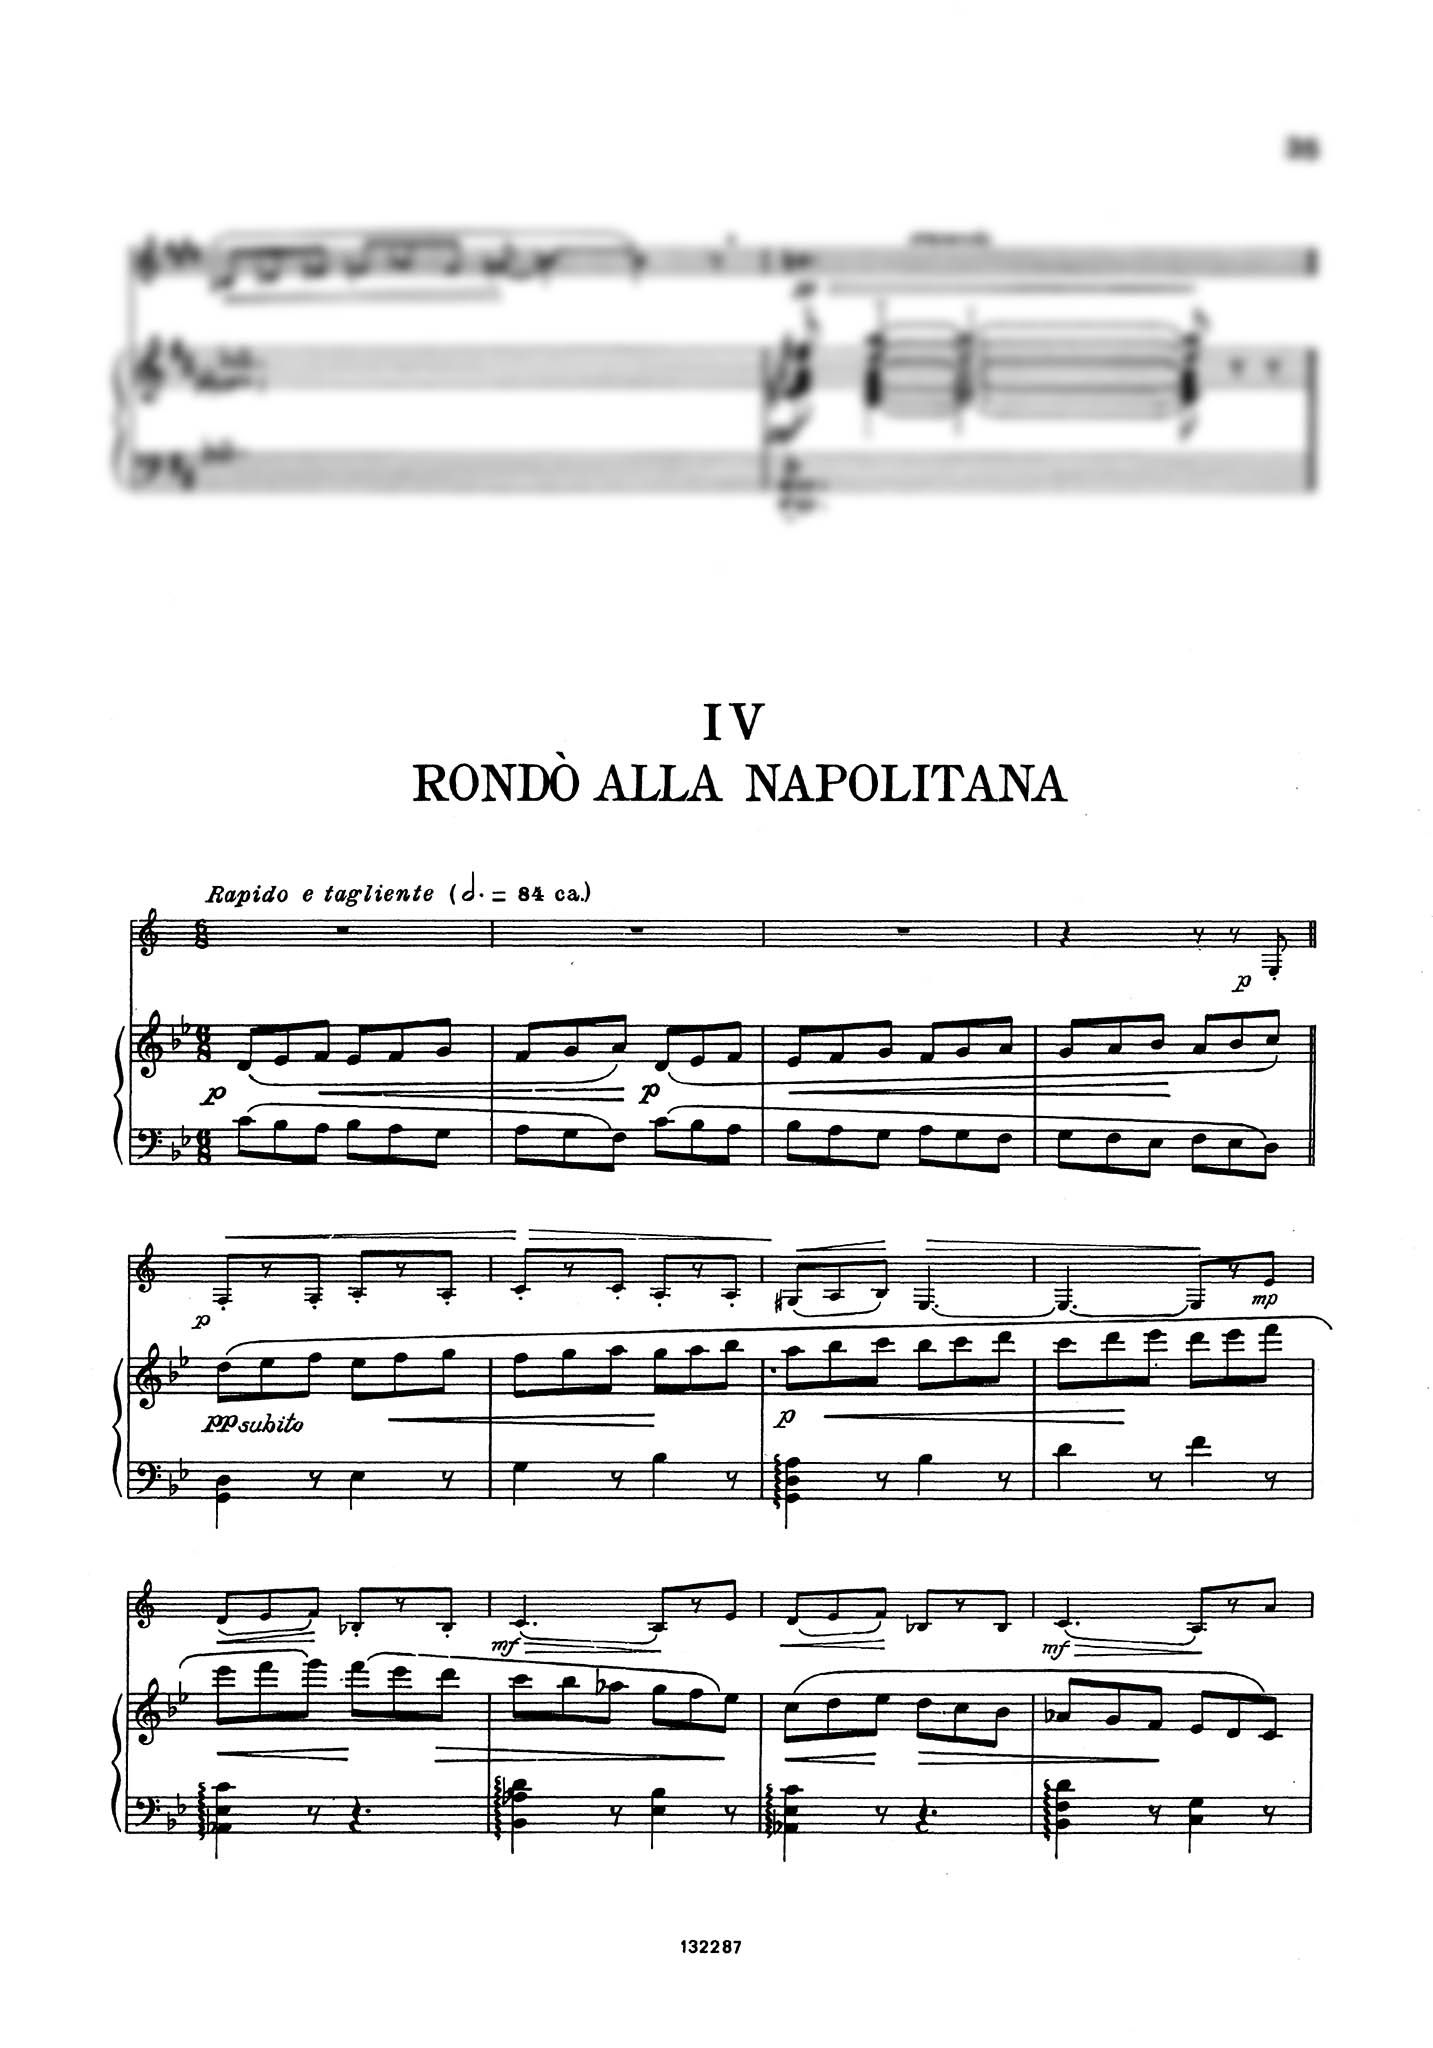 Sonata, Op. 128 - Movement 4